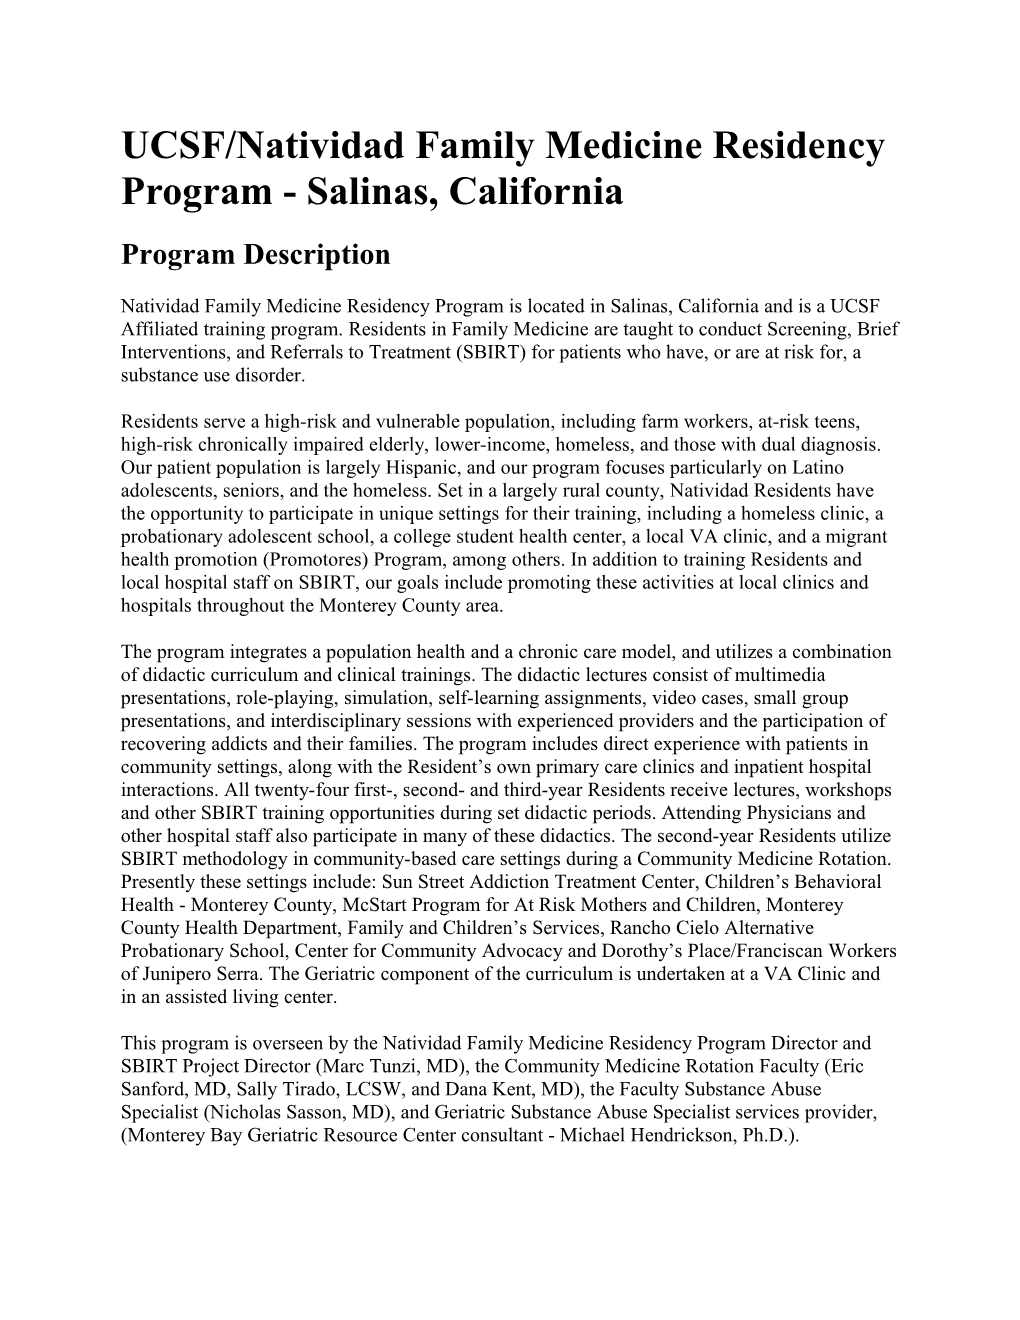 UCSF/Natividad Family Medicine Residency Program - Salinas, California